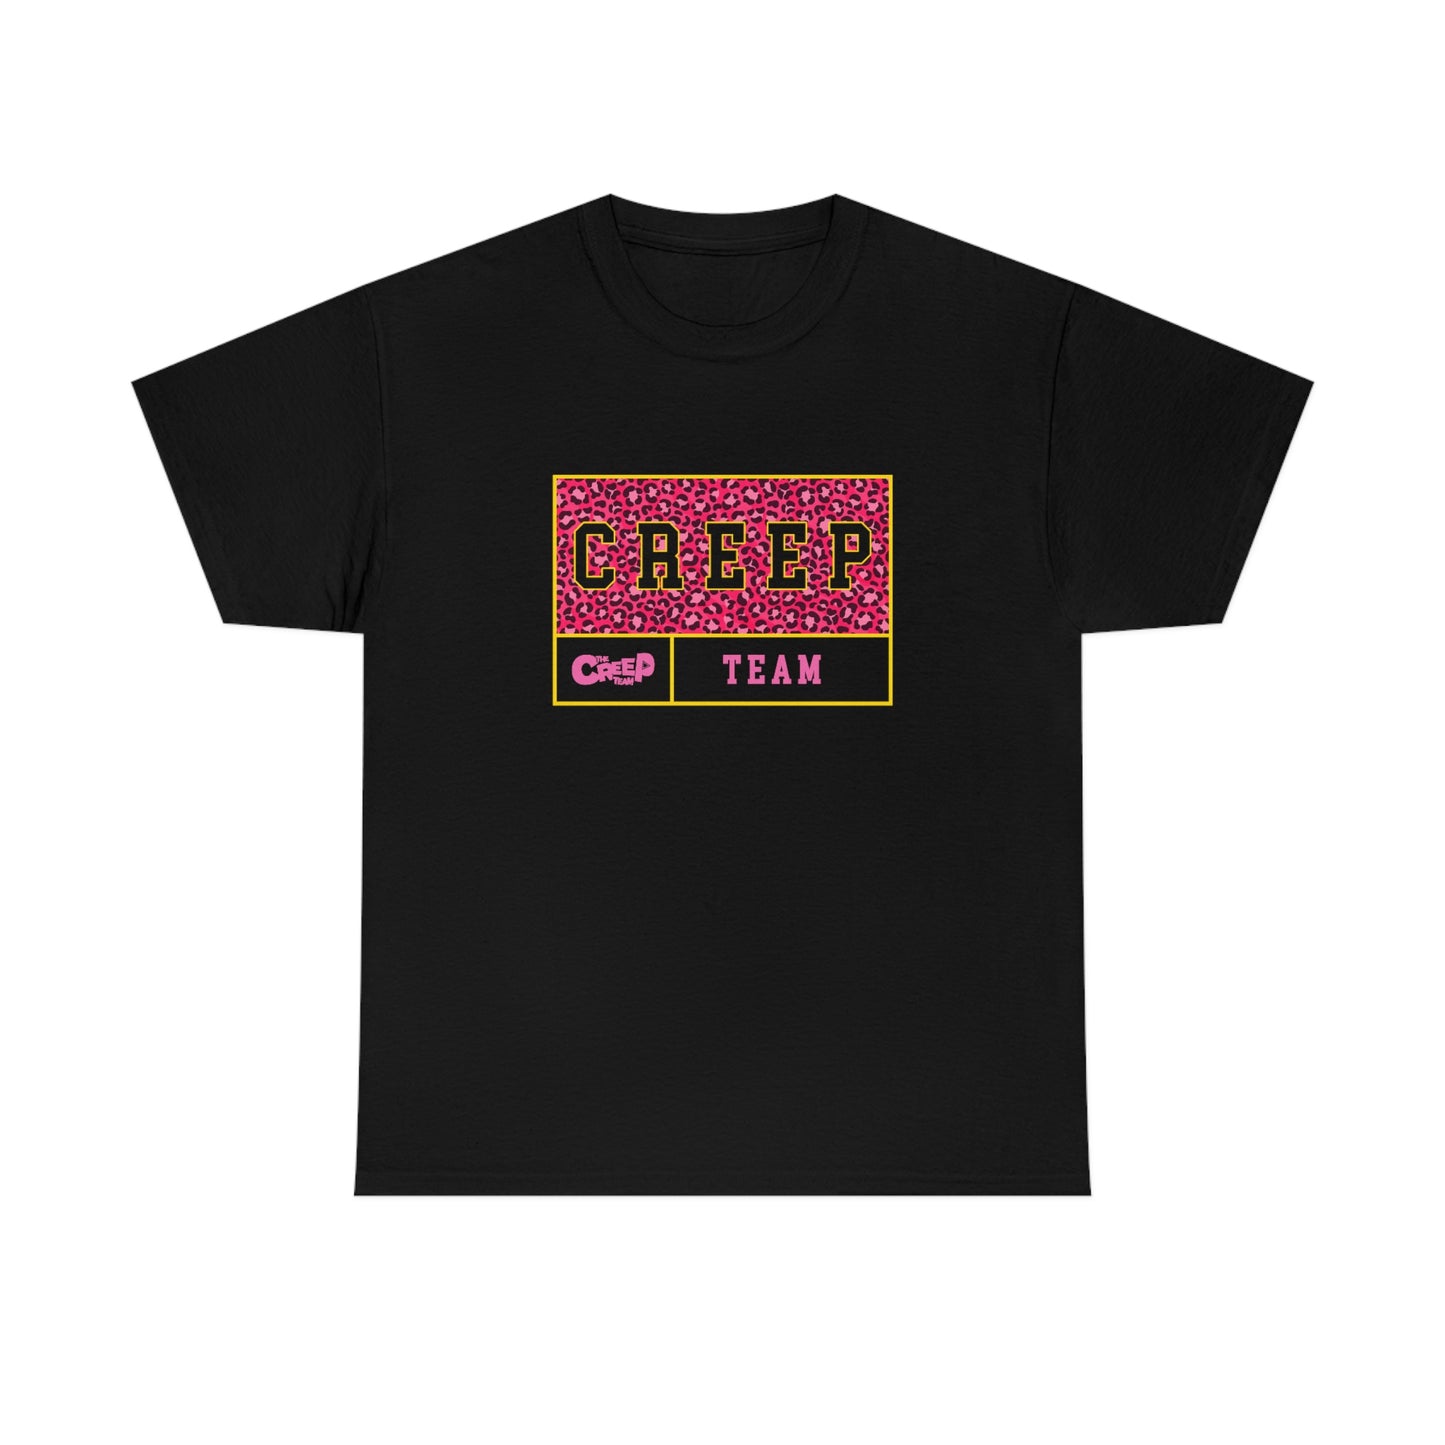 Creep Team Crew T-Shirt